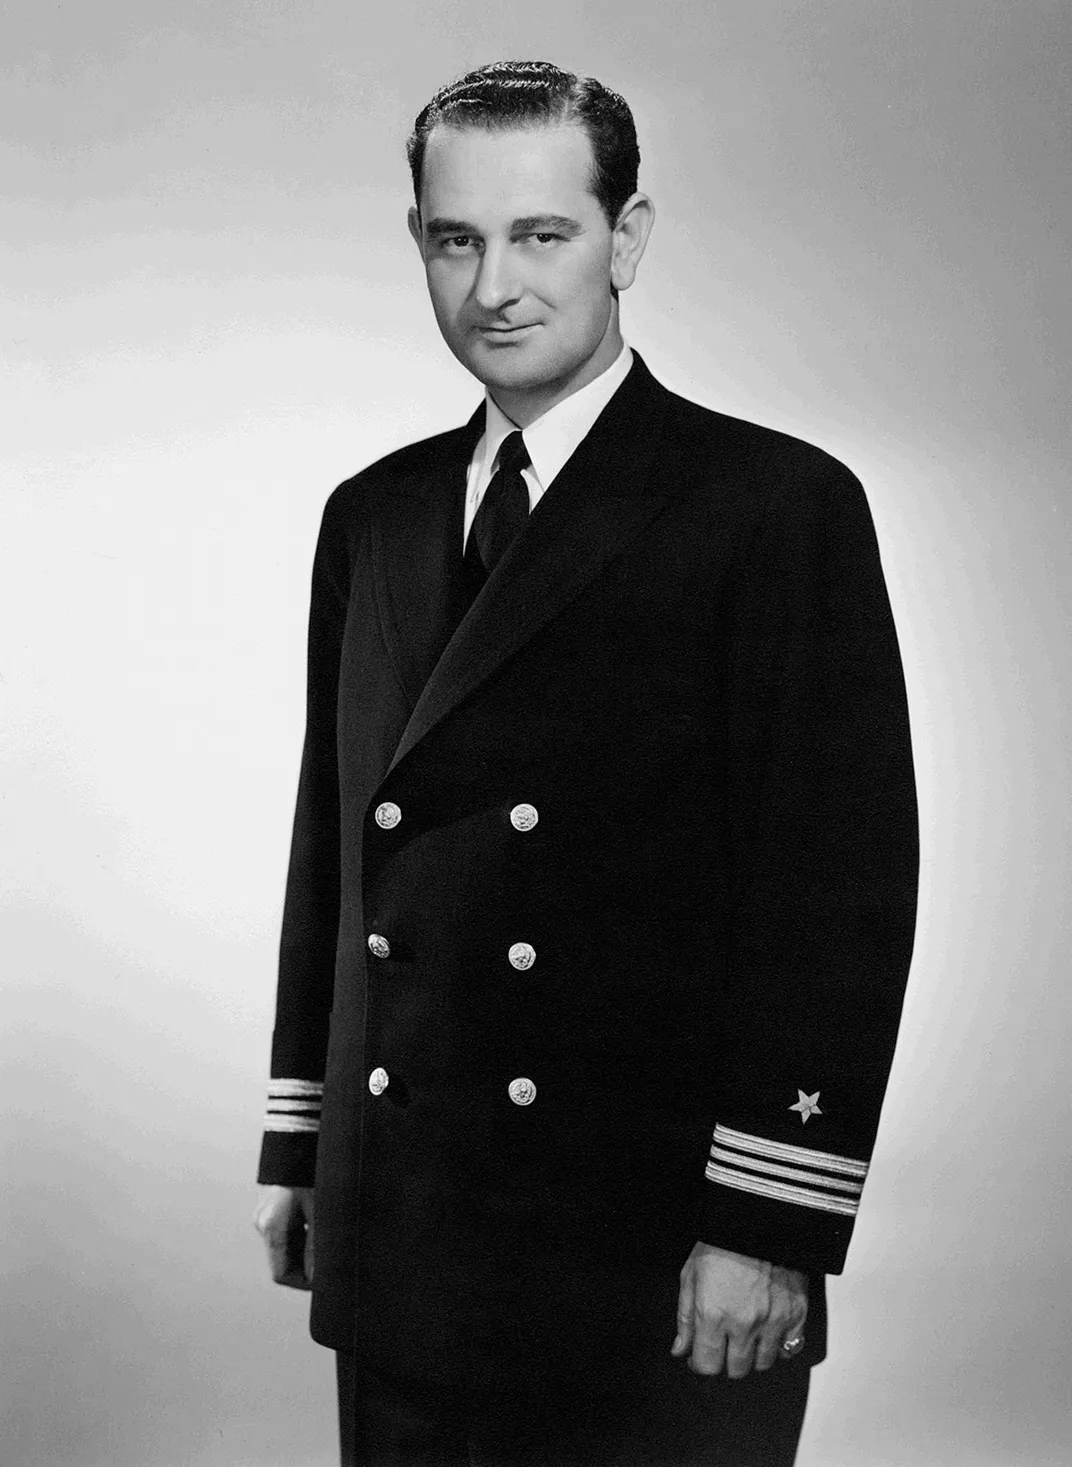 Johnson in his Navy uniform in 1942